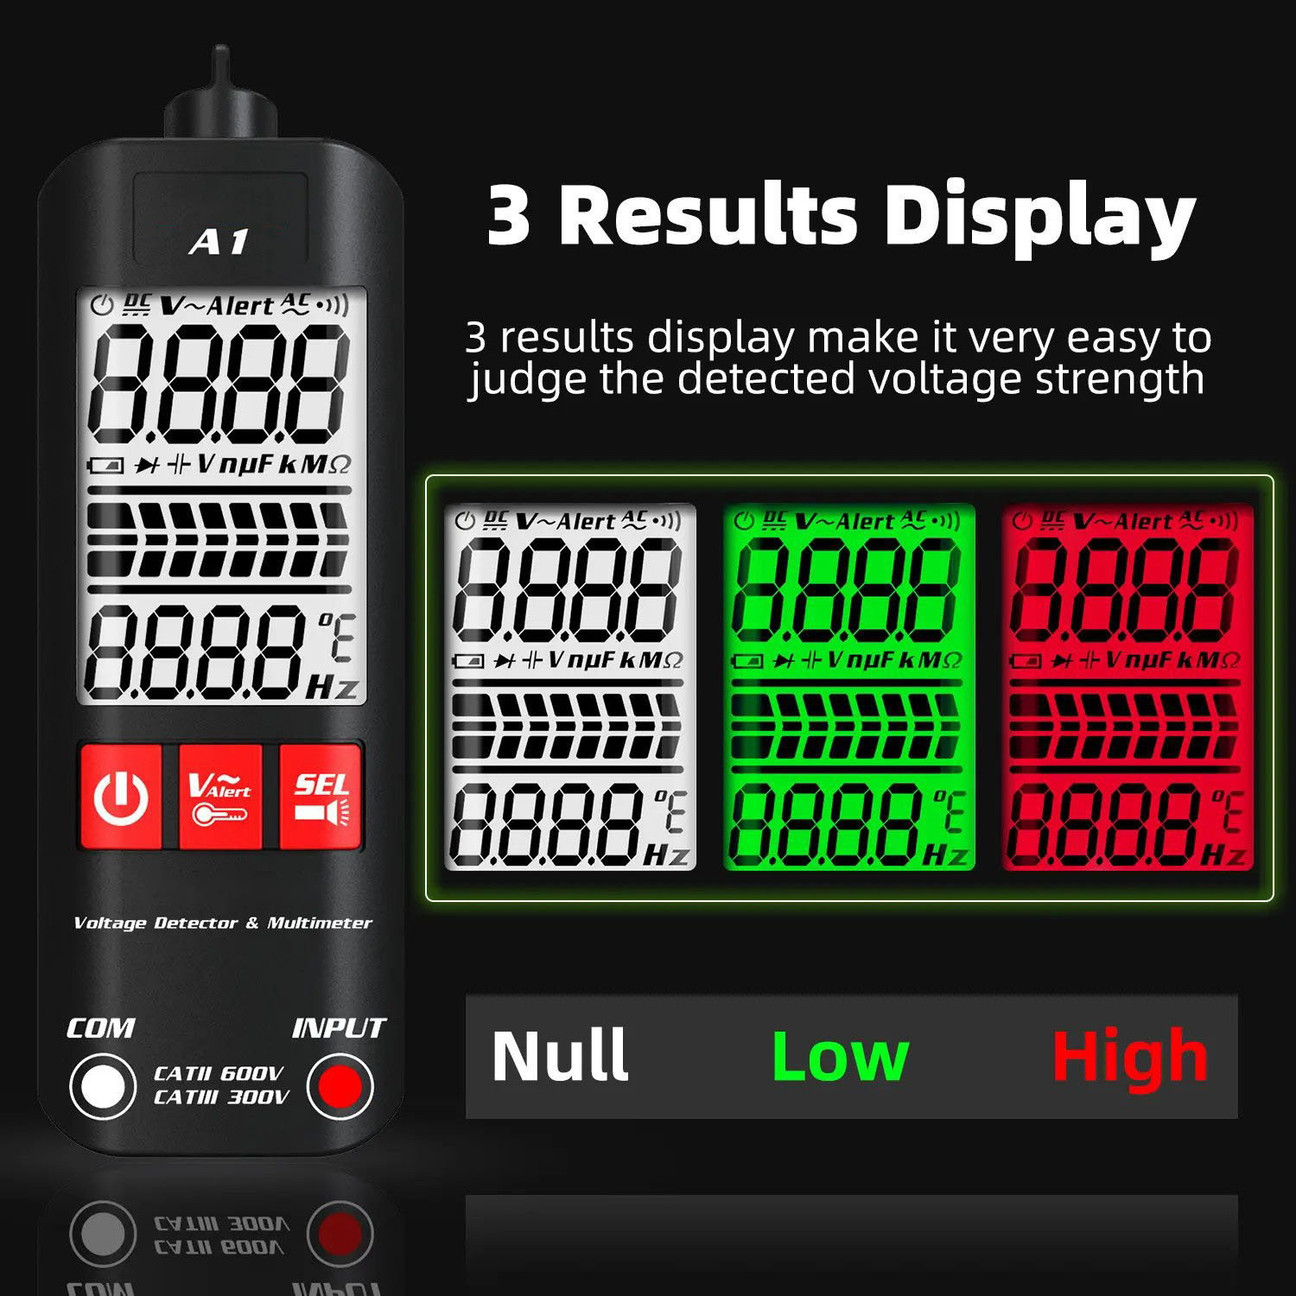 A1 Fully Automatic Anti-Burn Intelligent Digital Multimeter 🔥HOT SALE 50%🔥